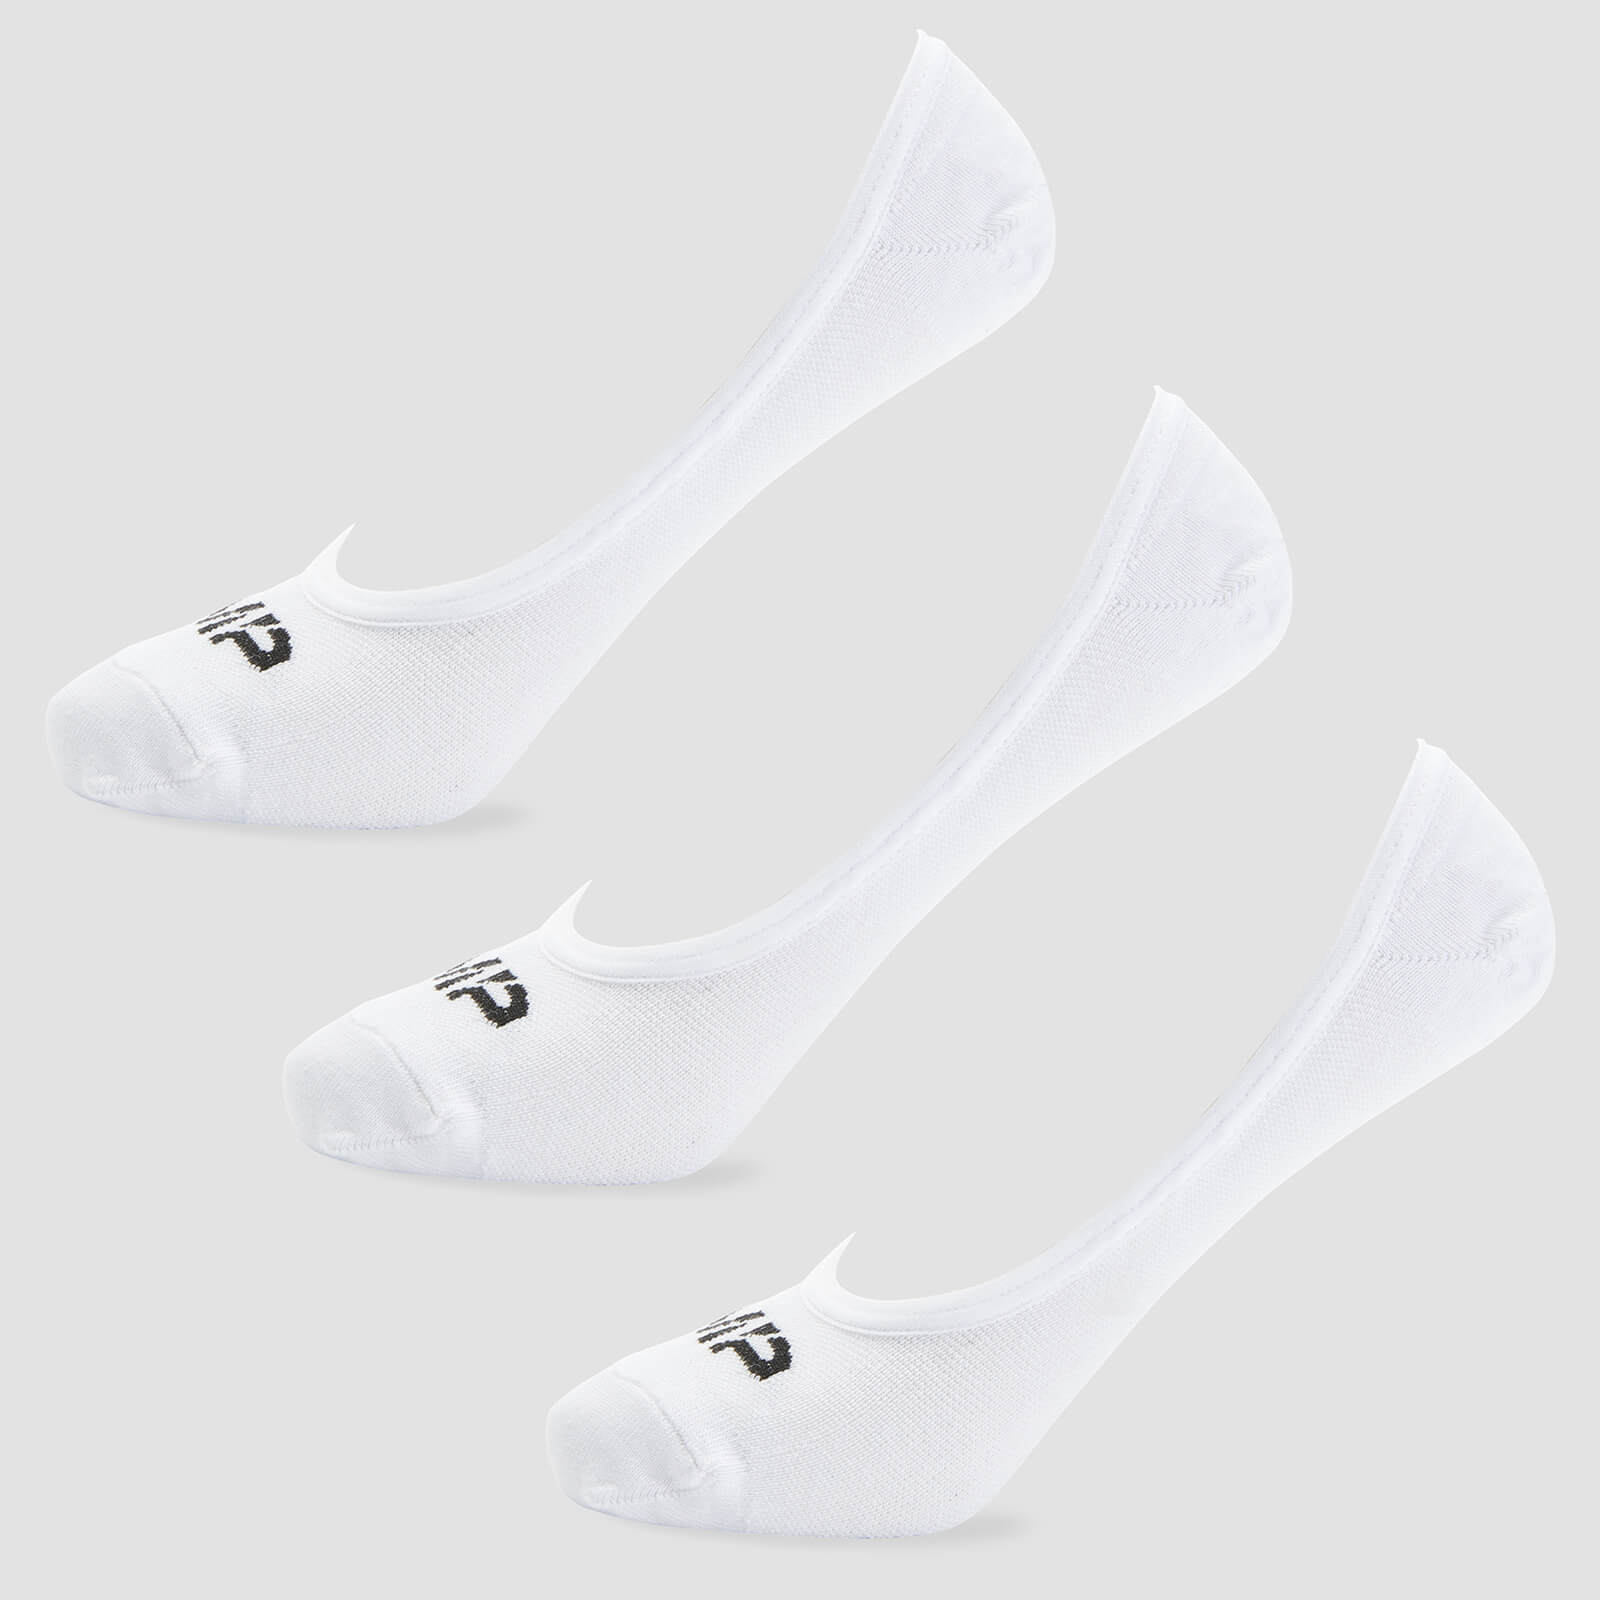 MP Αντρικές Αόρατες Κάλτσες - Άσπρες - UK 6-8